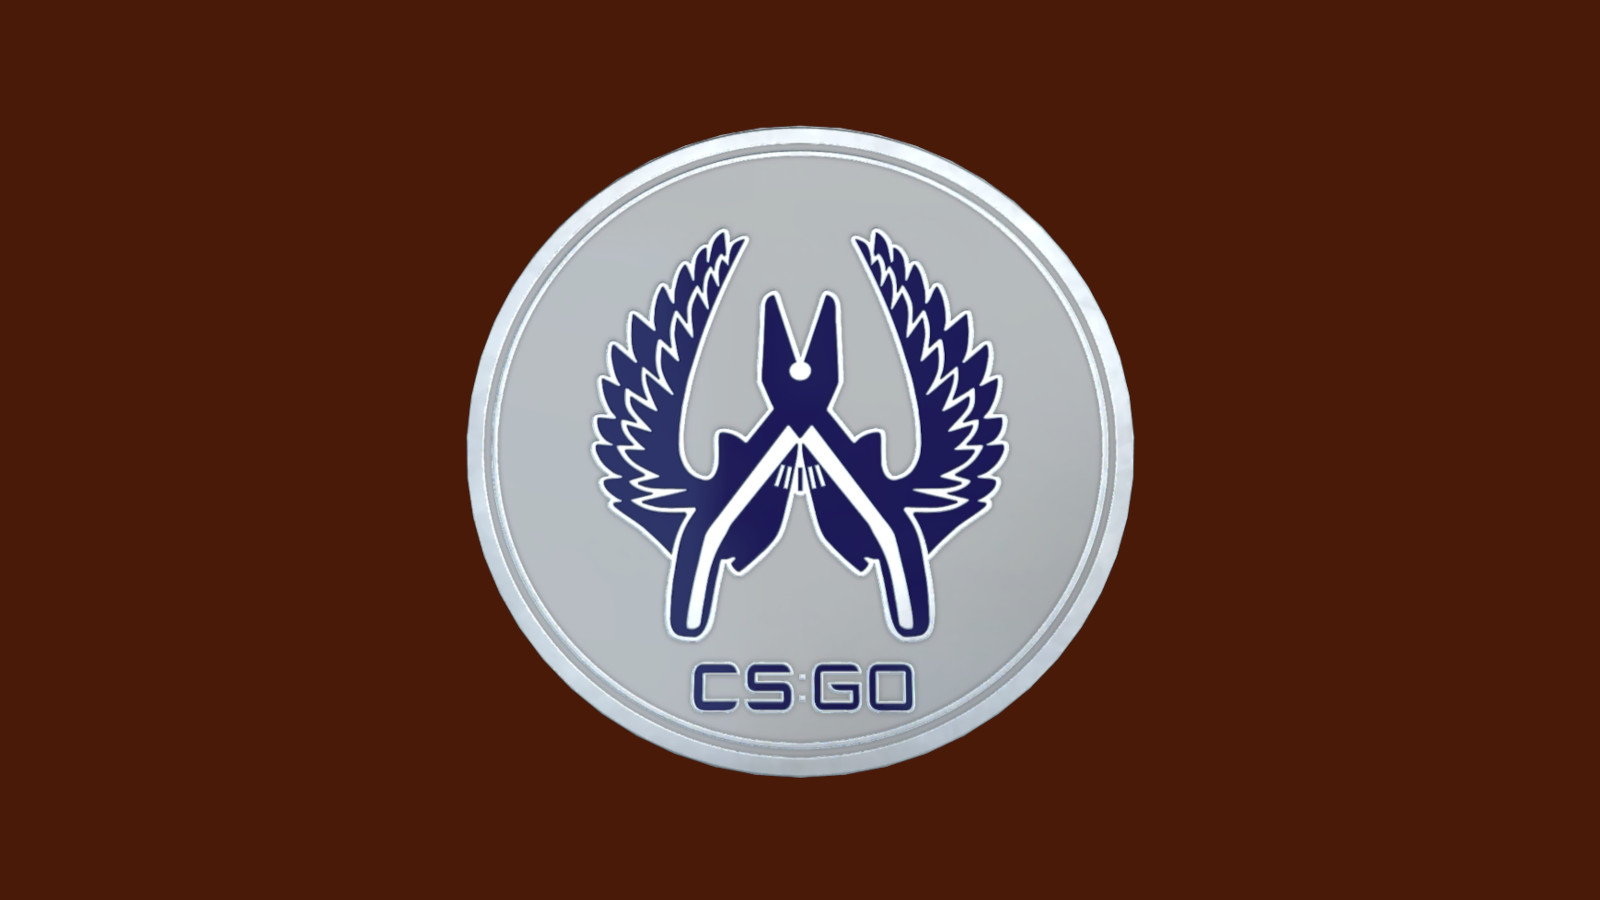 CS:GO - Series 3 - Guardian 3 Collectible Pin, 225.98 usd